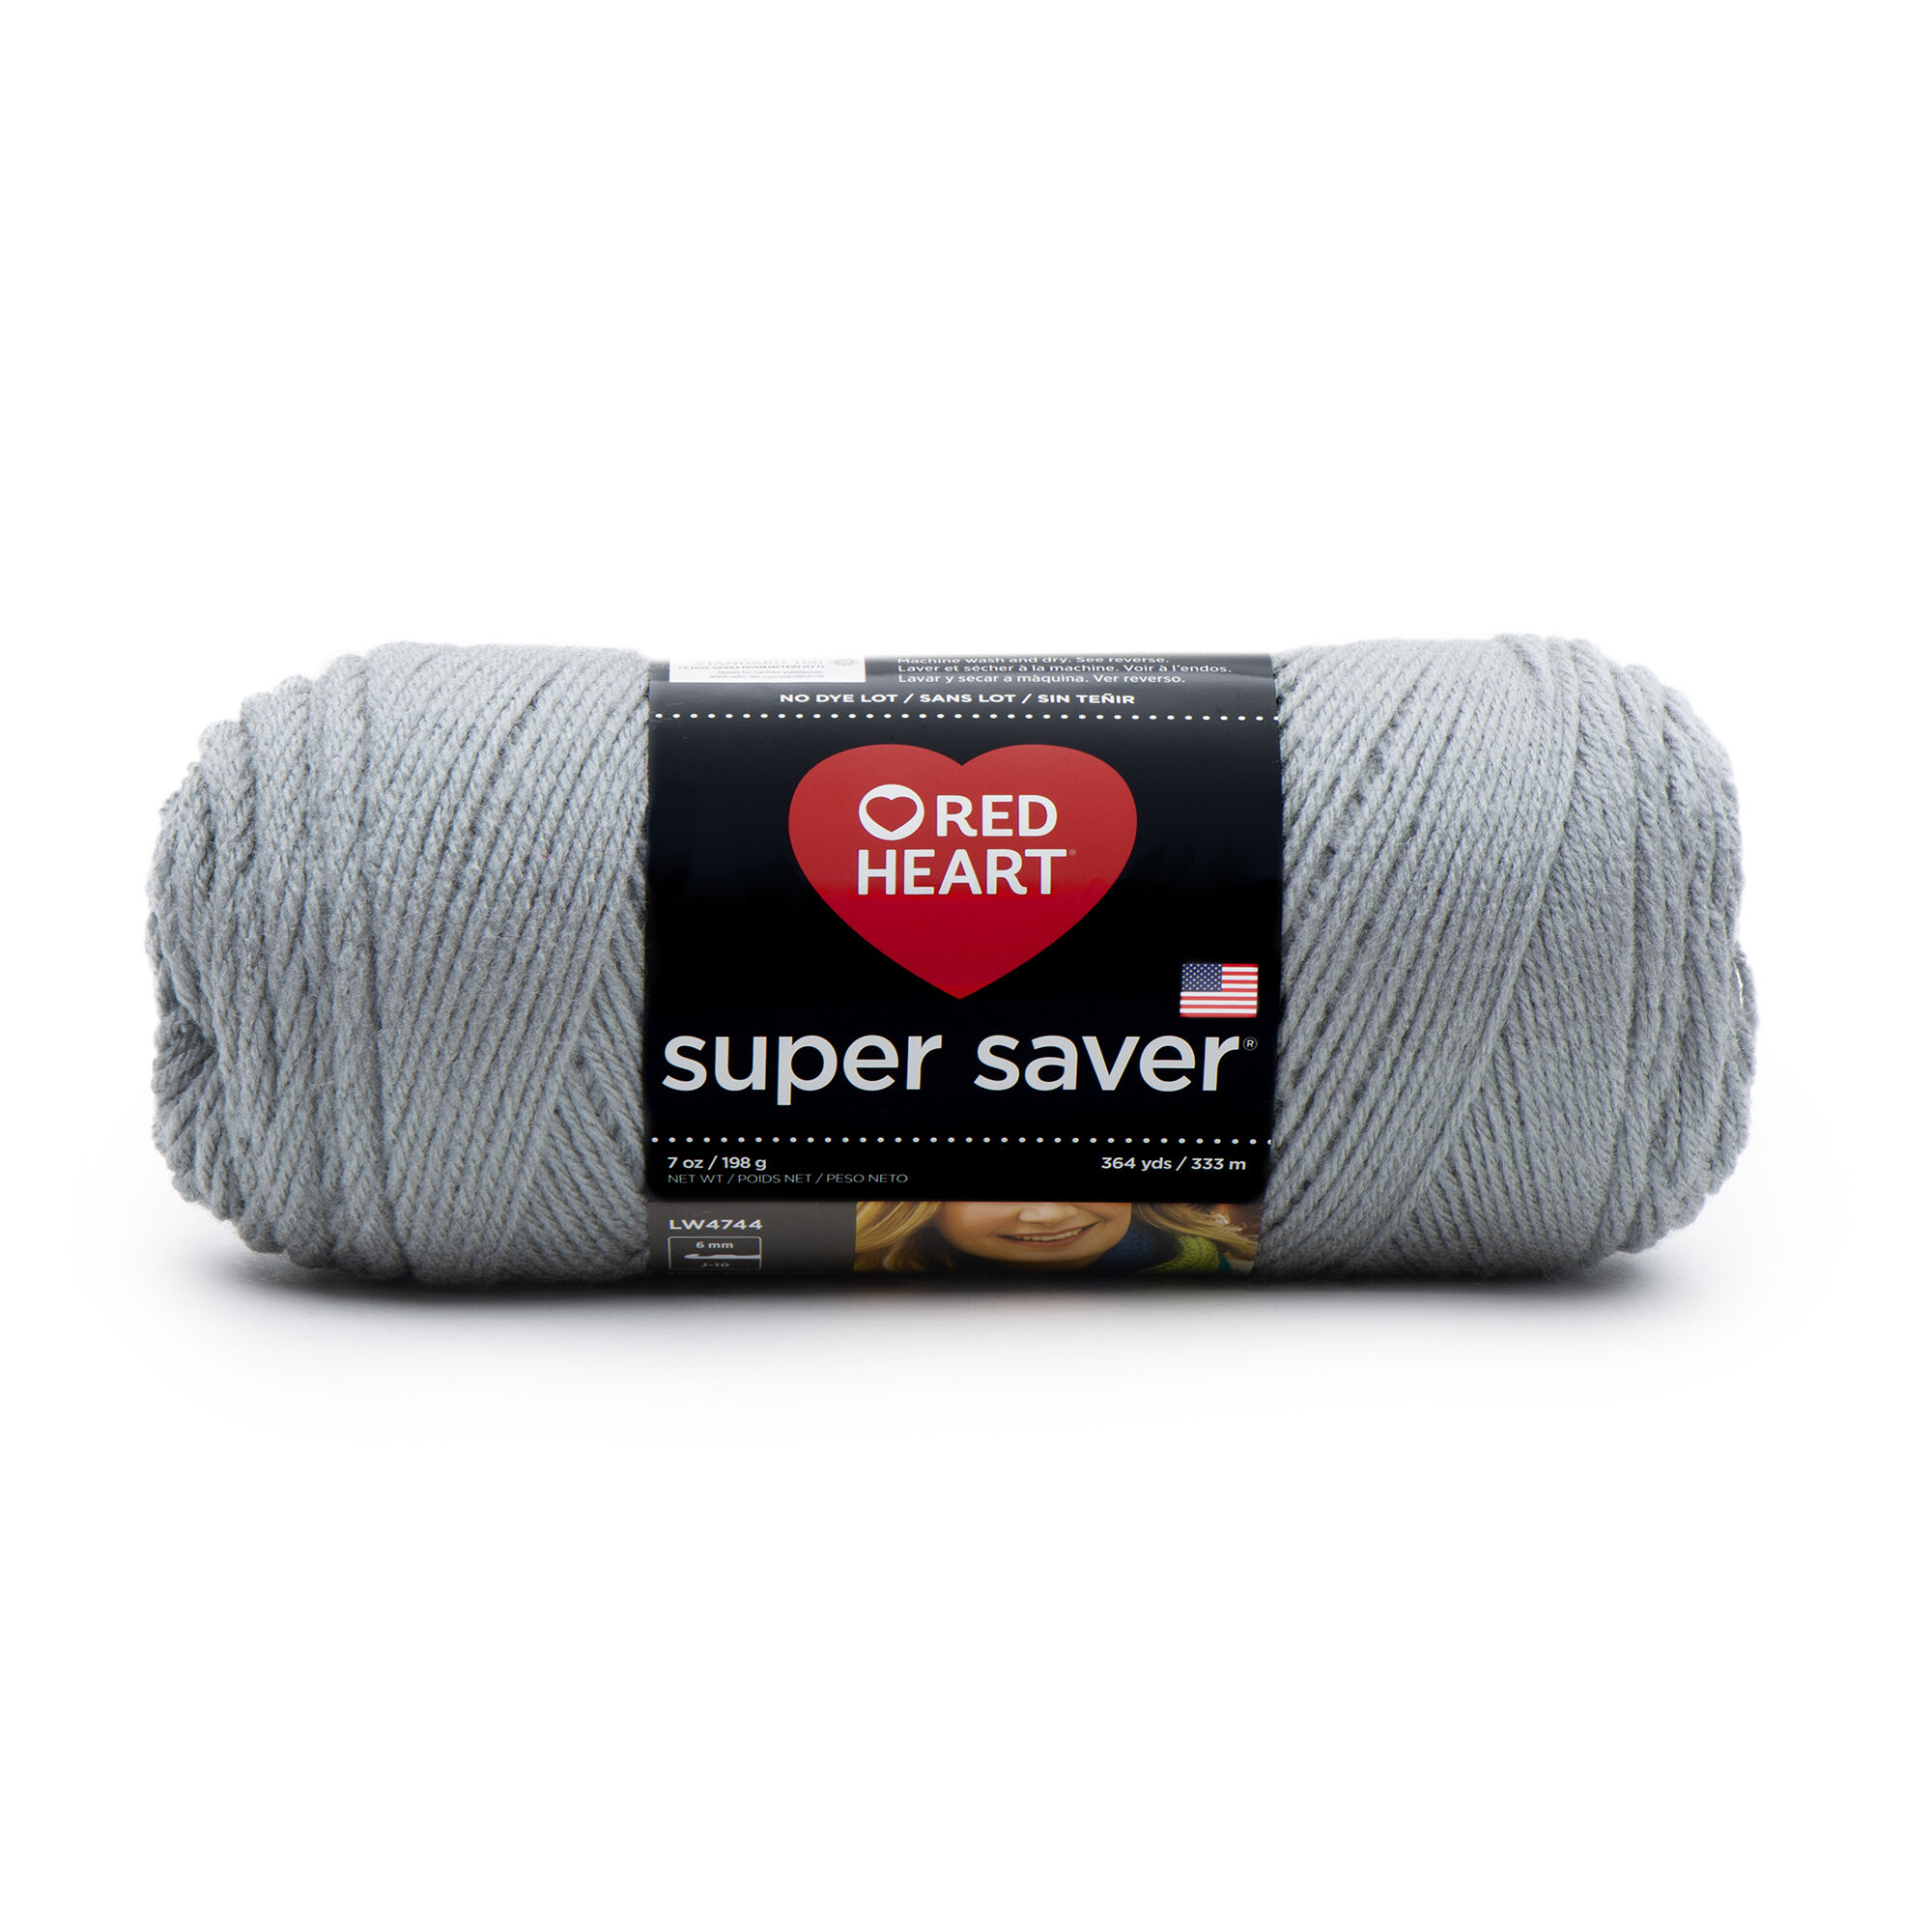 Red Heart Super Saver® 4 Medium Acrylic Yarn, Dusty Gray 7oz/198g, 364 Yards - image 1 of 15